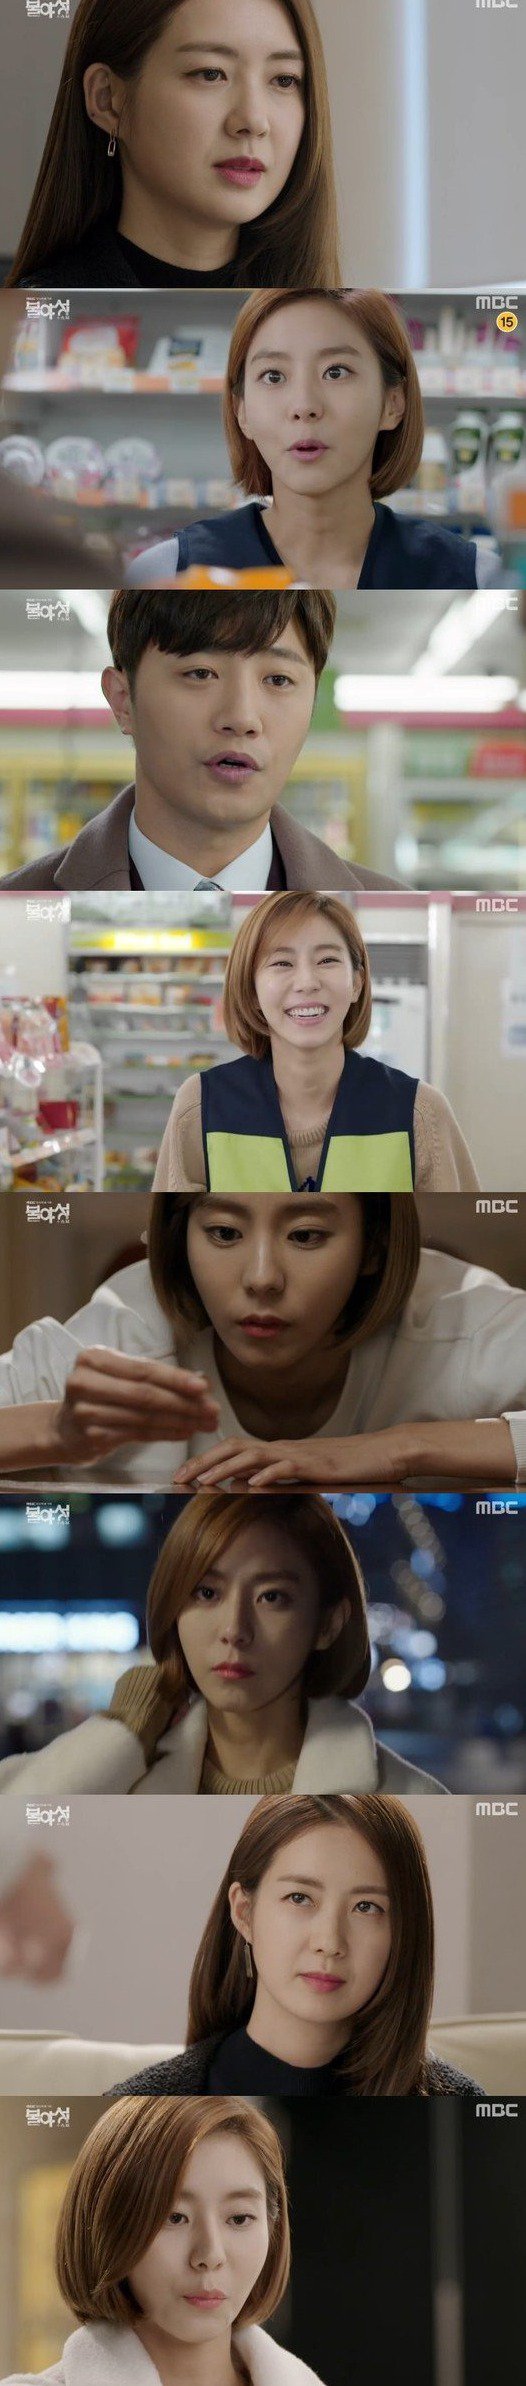 episode 7 captures for the Korean drama 'Night Light'